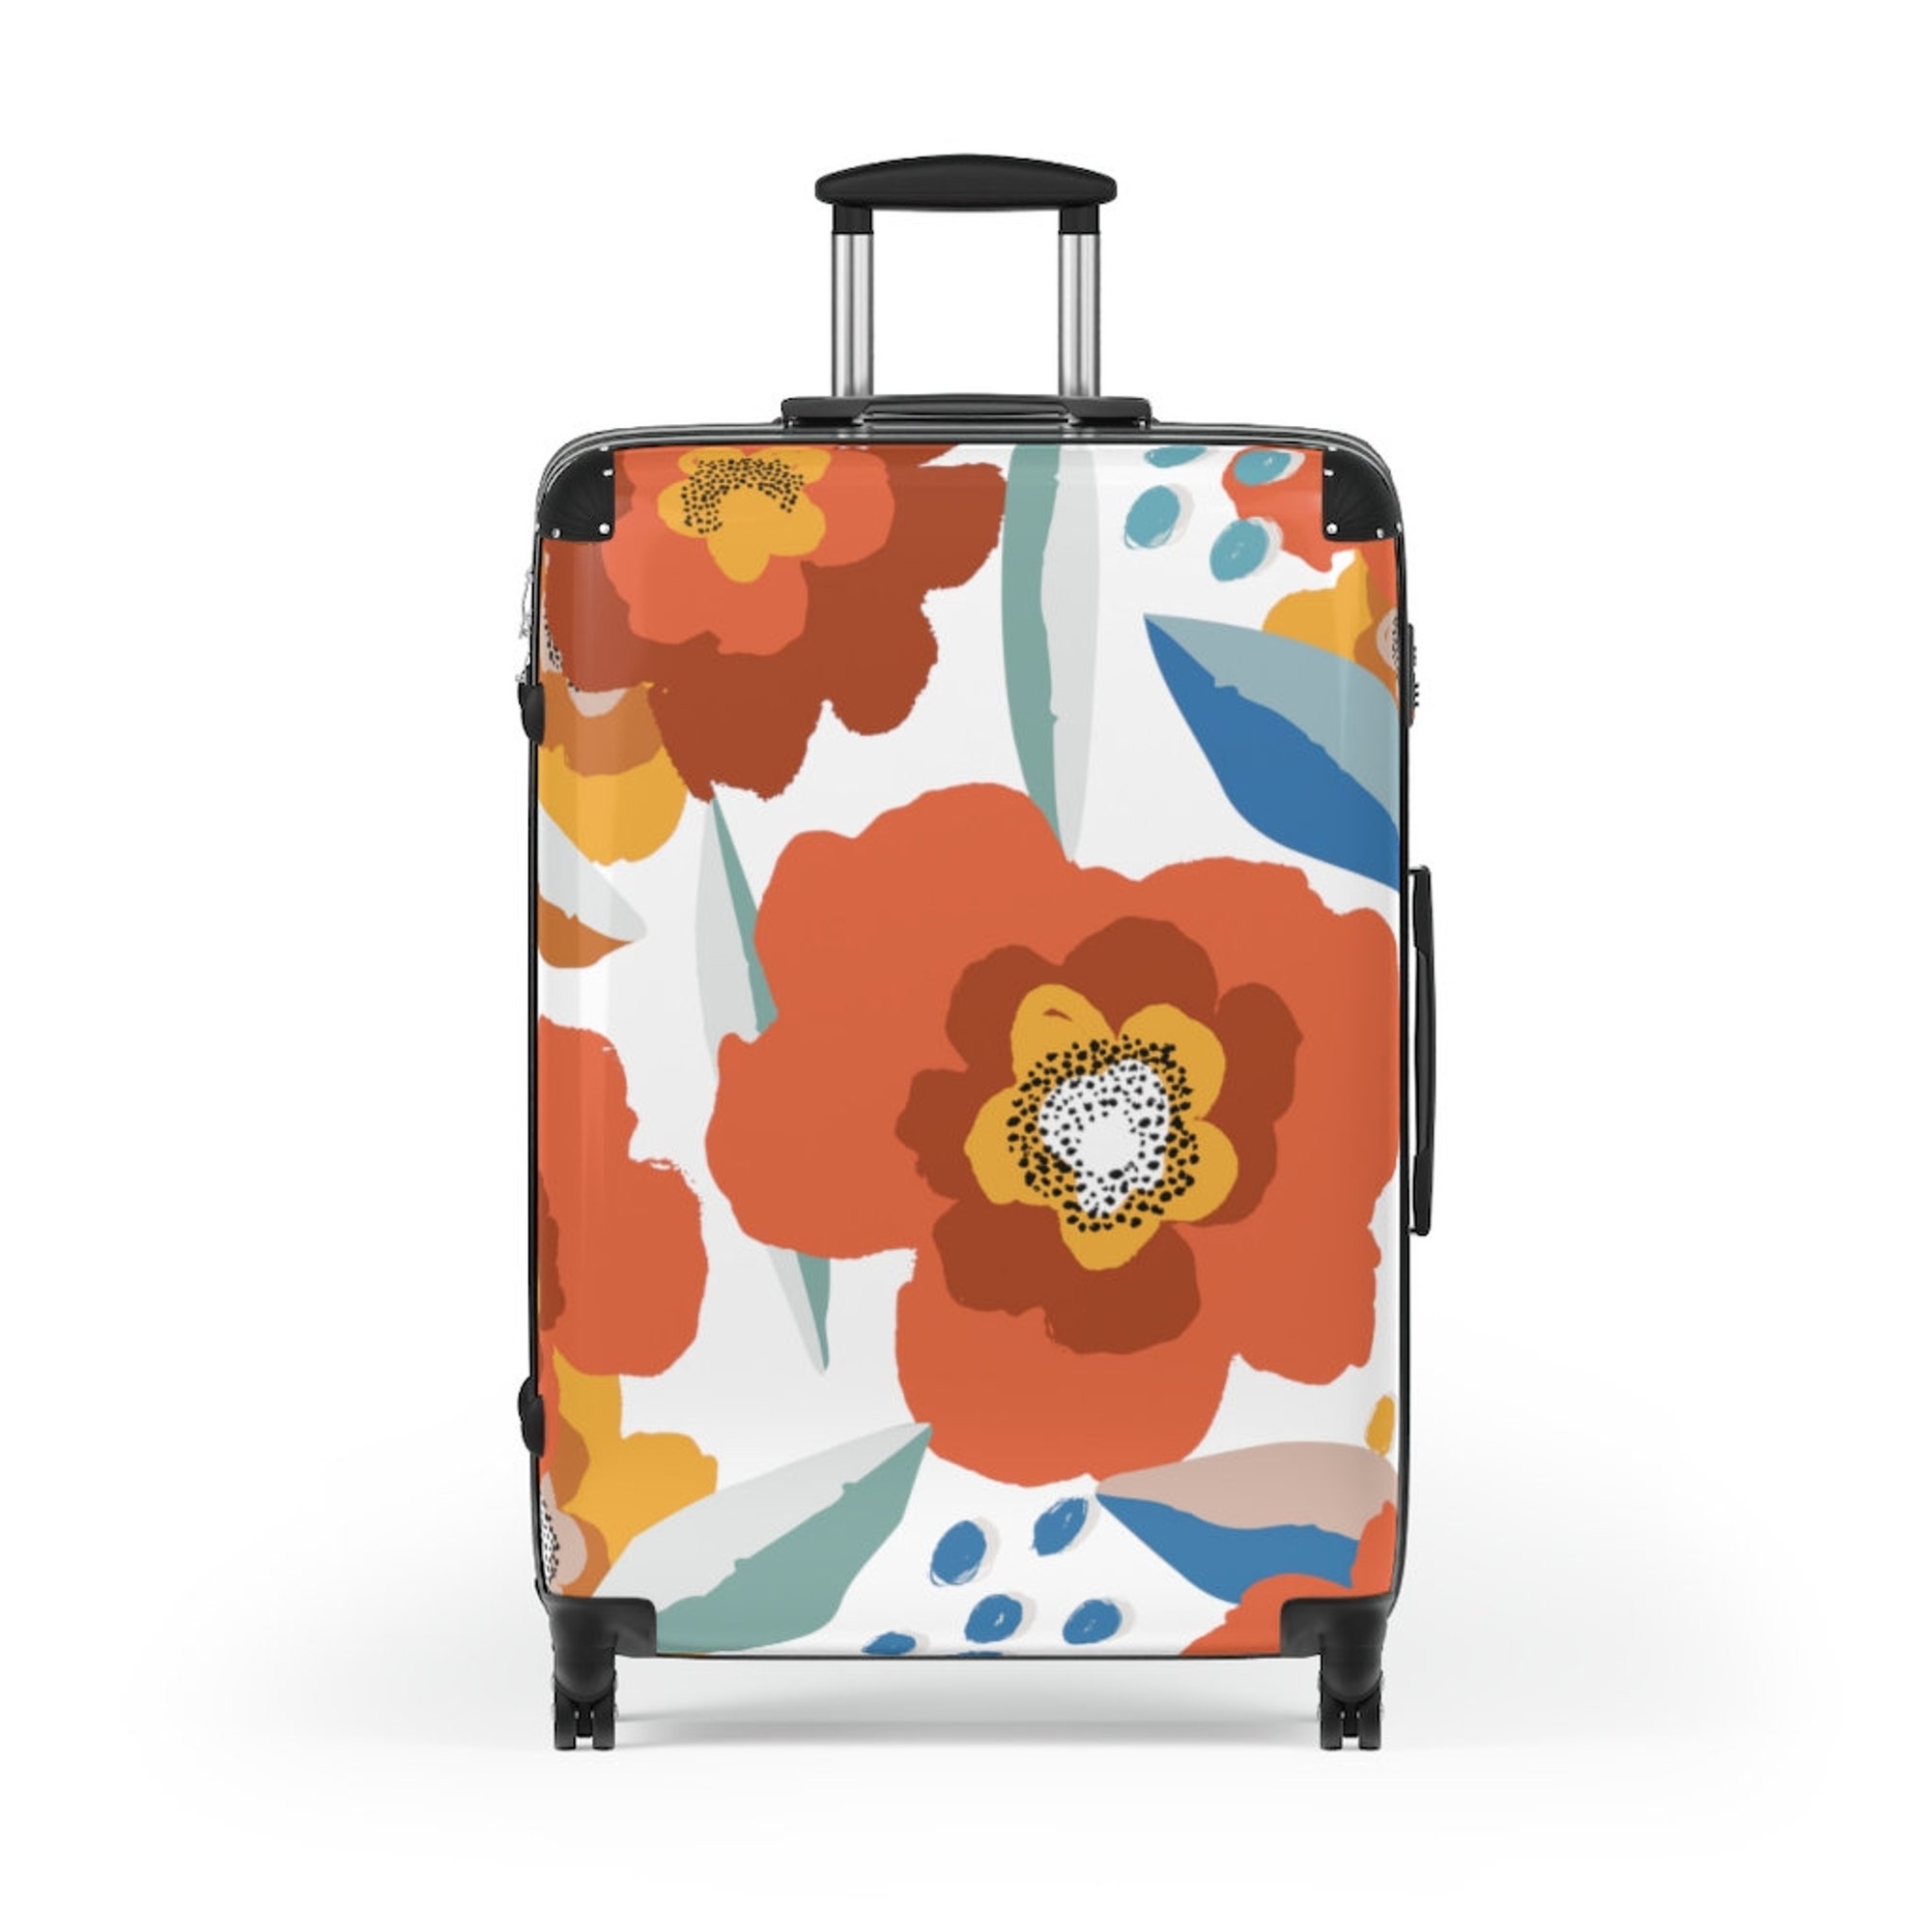 Discover The Fleur Suitcase